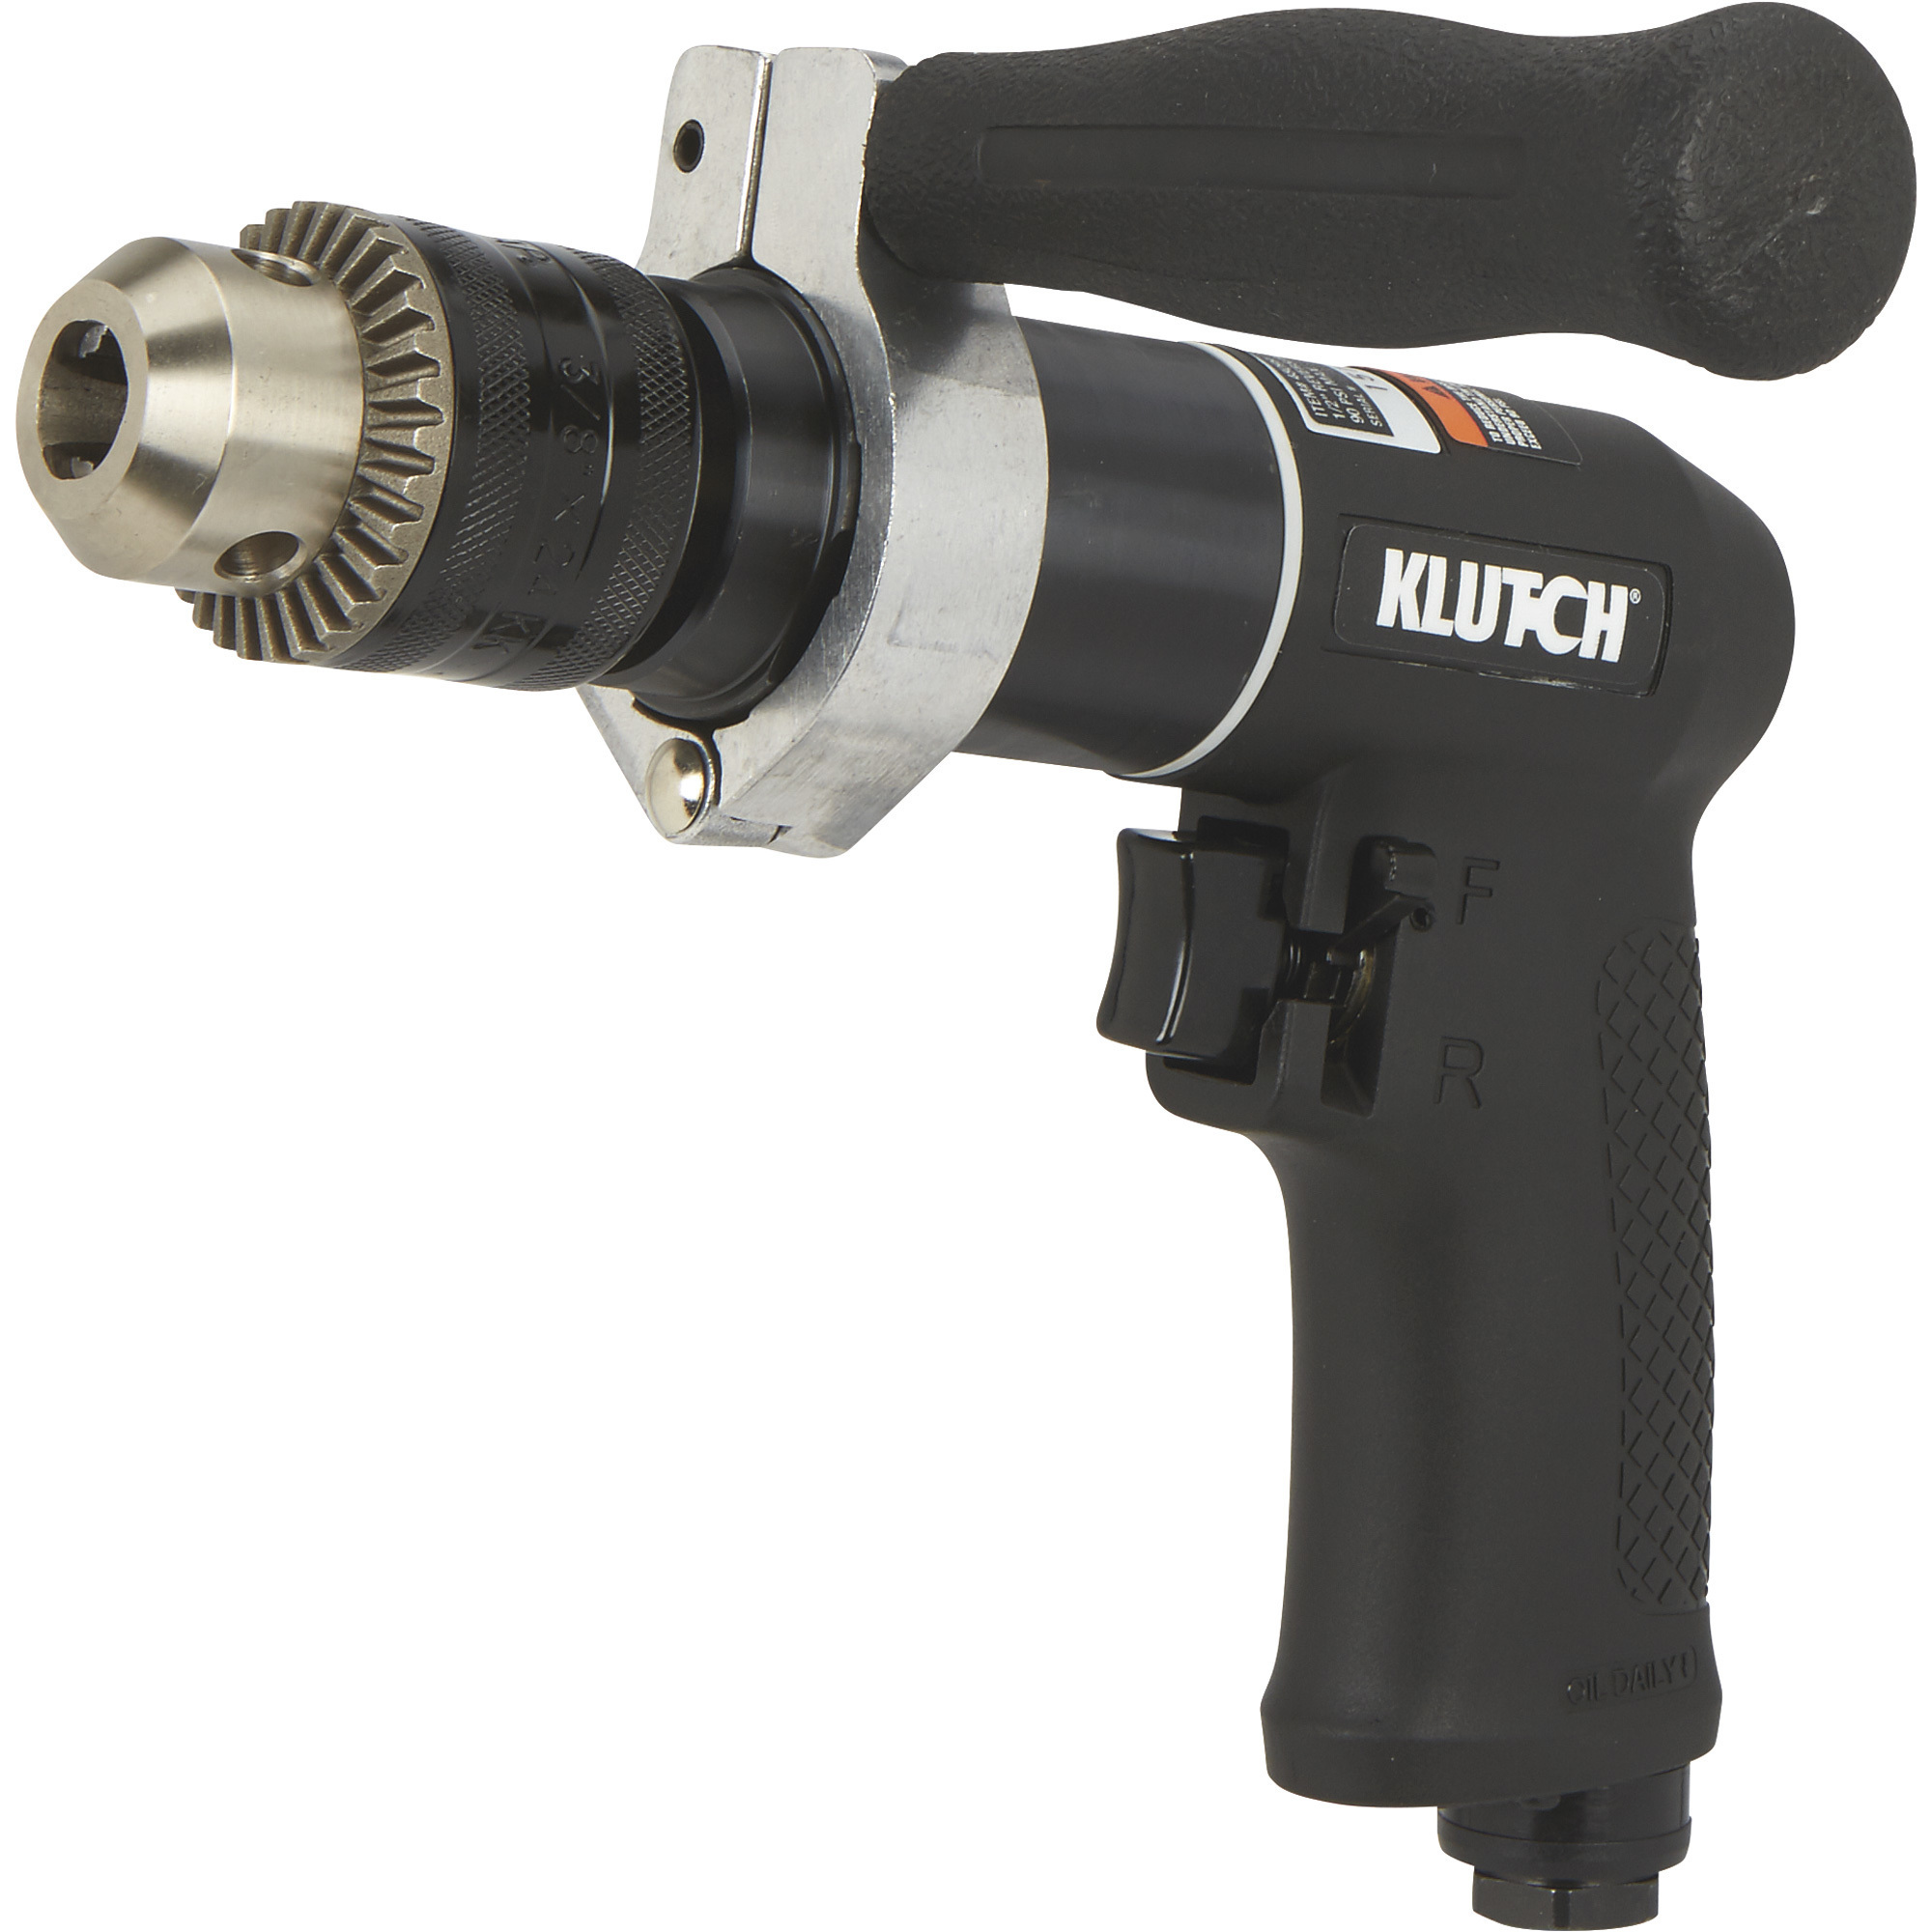 Klutch Air Drill, 1/2Inch Keyed Chuck, 800 RPM, Reversible, 4 CFM